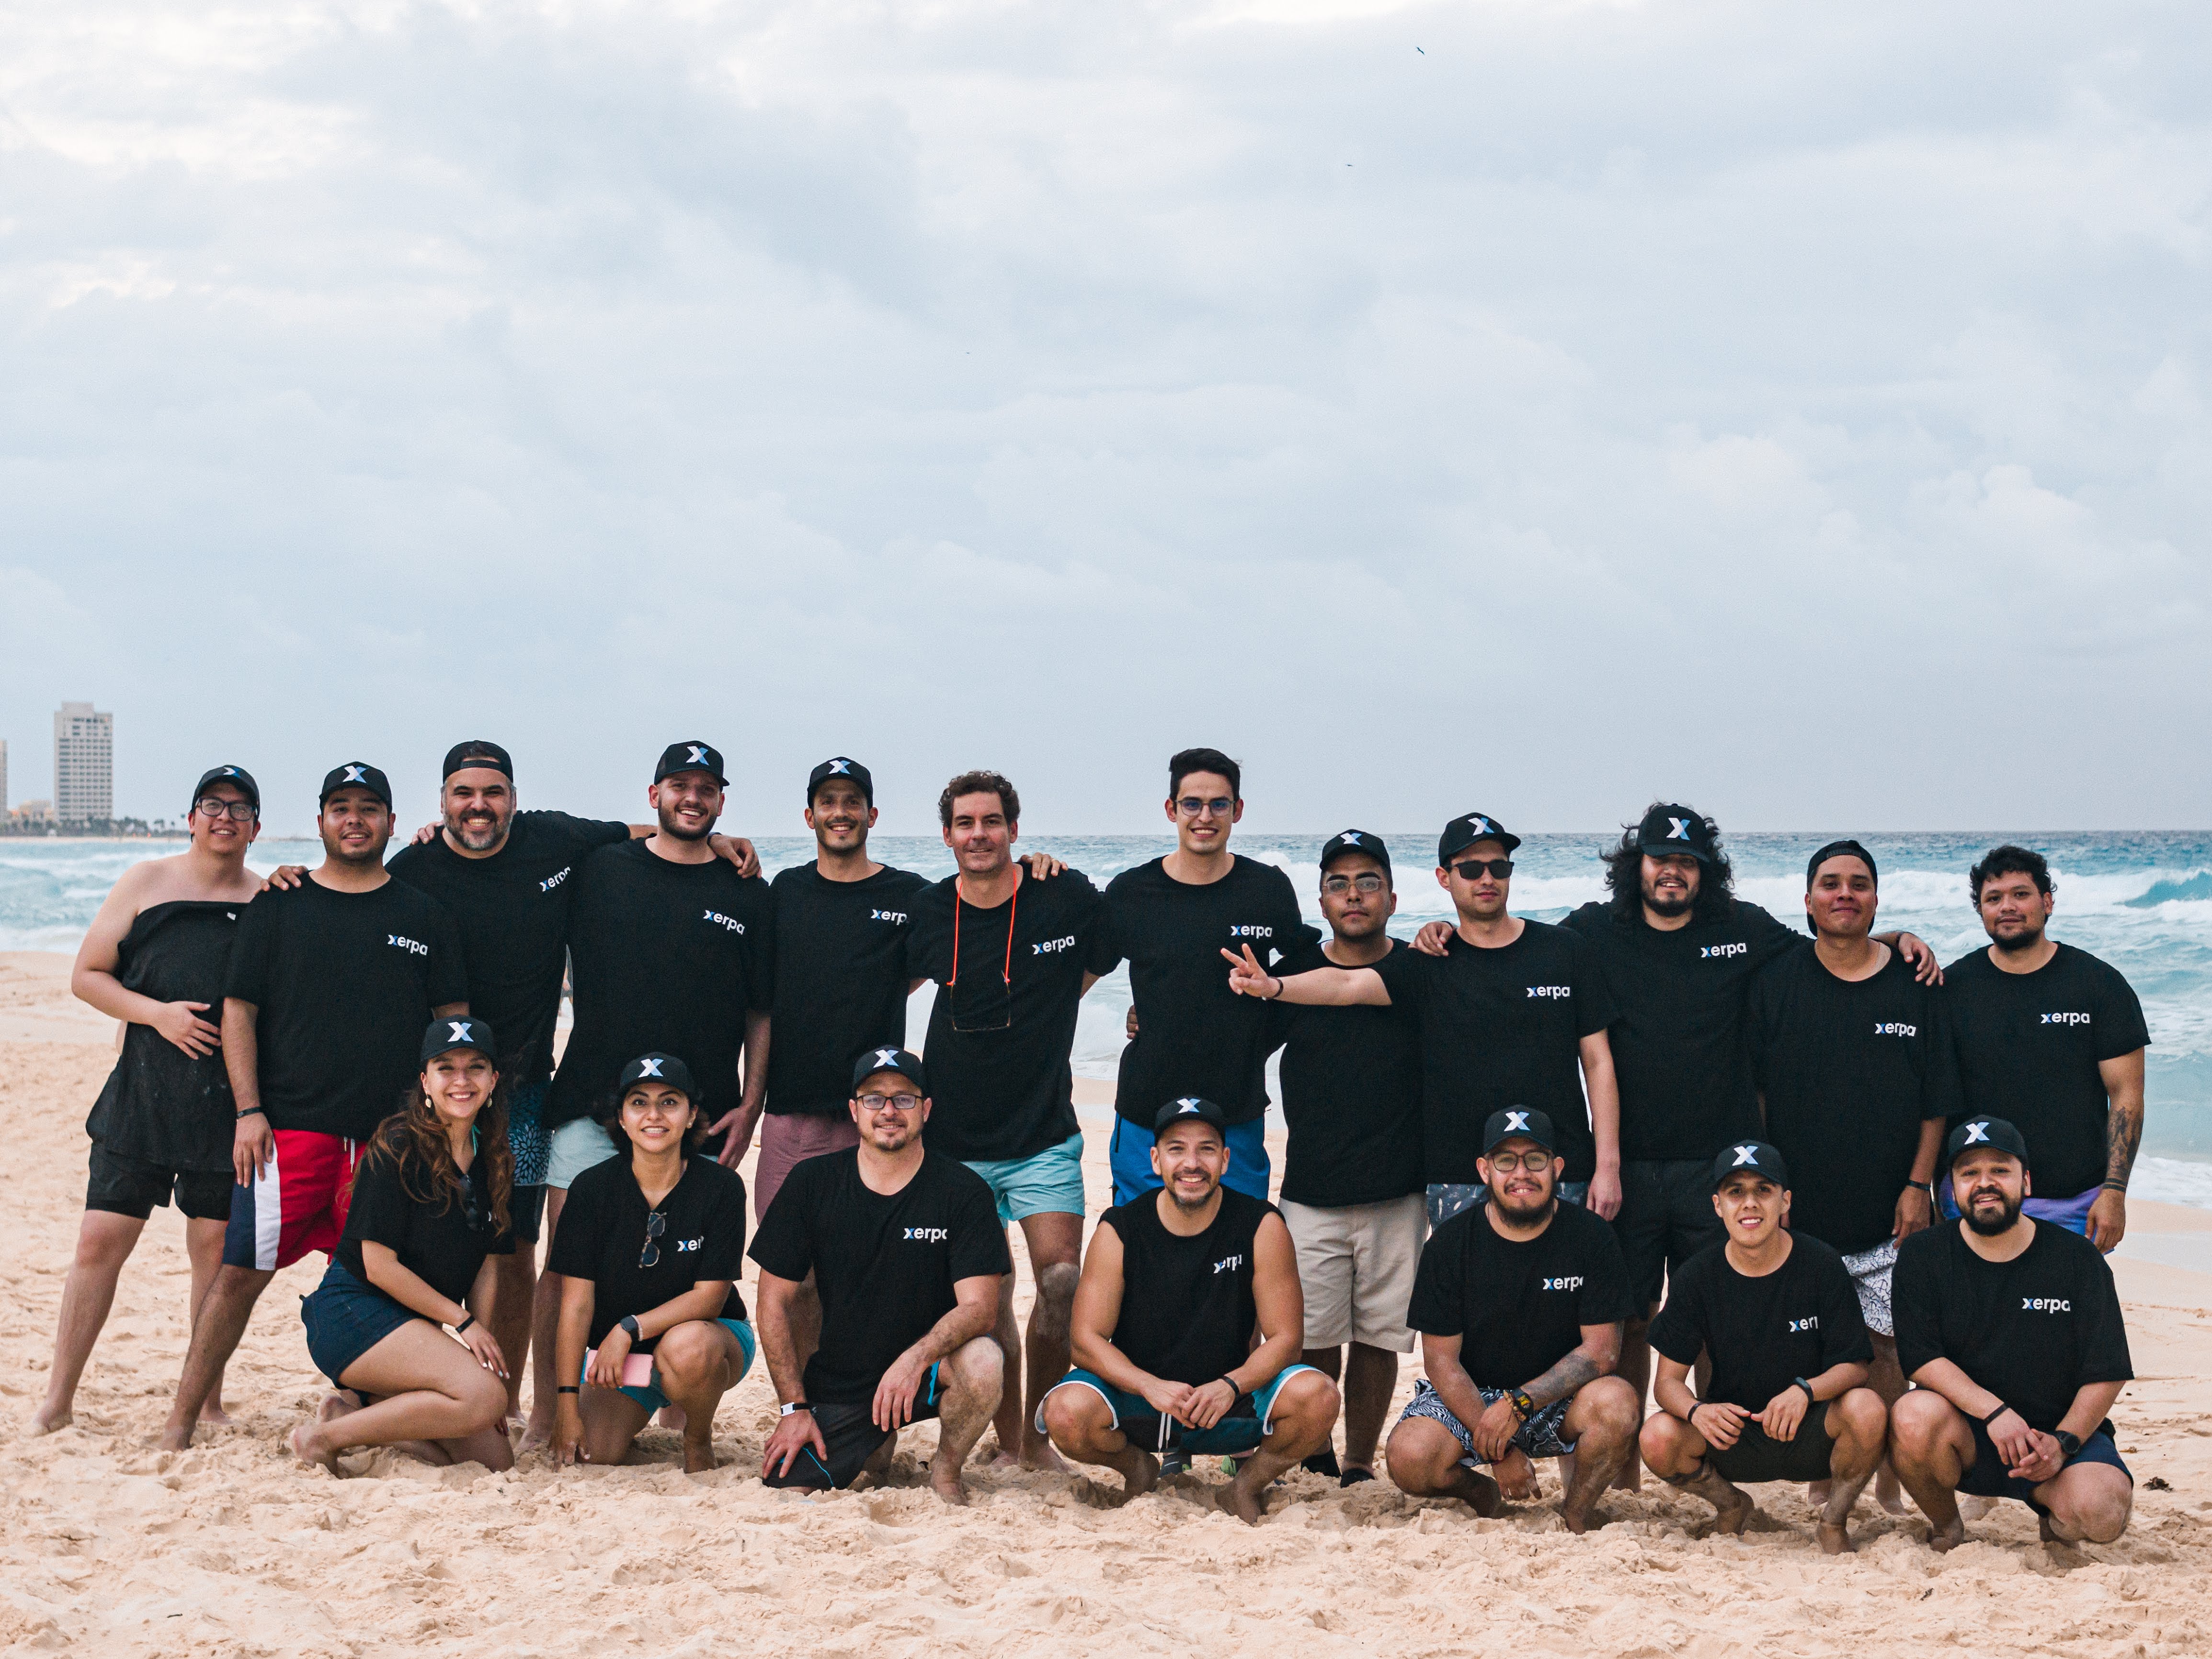 foto del equipo xerpa en offsite cancun